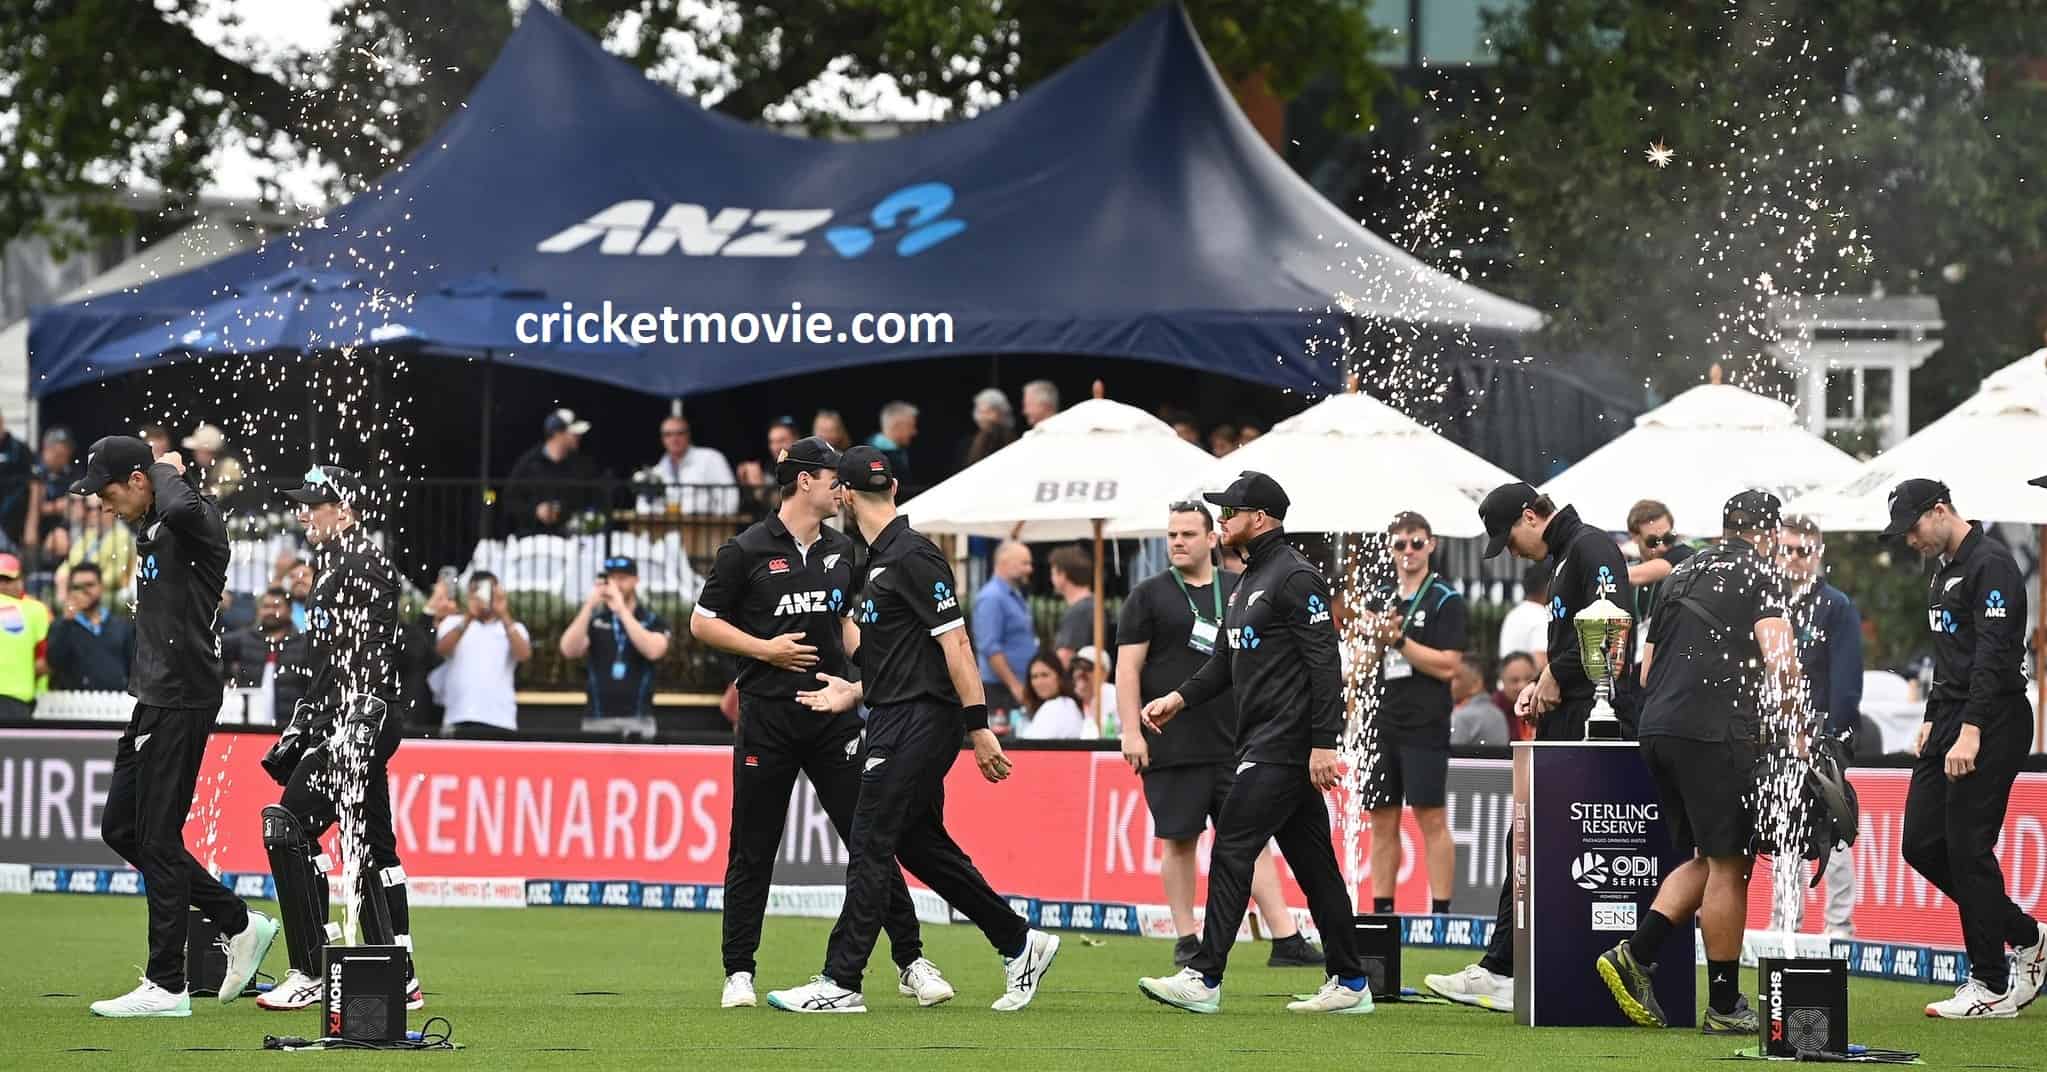 New Zealand won ODI series-cricketmovie.com